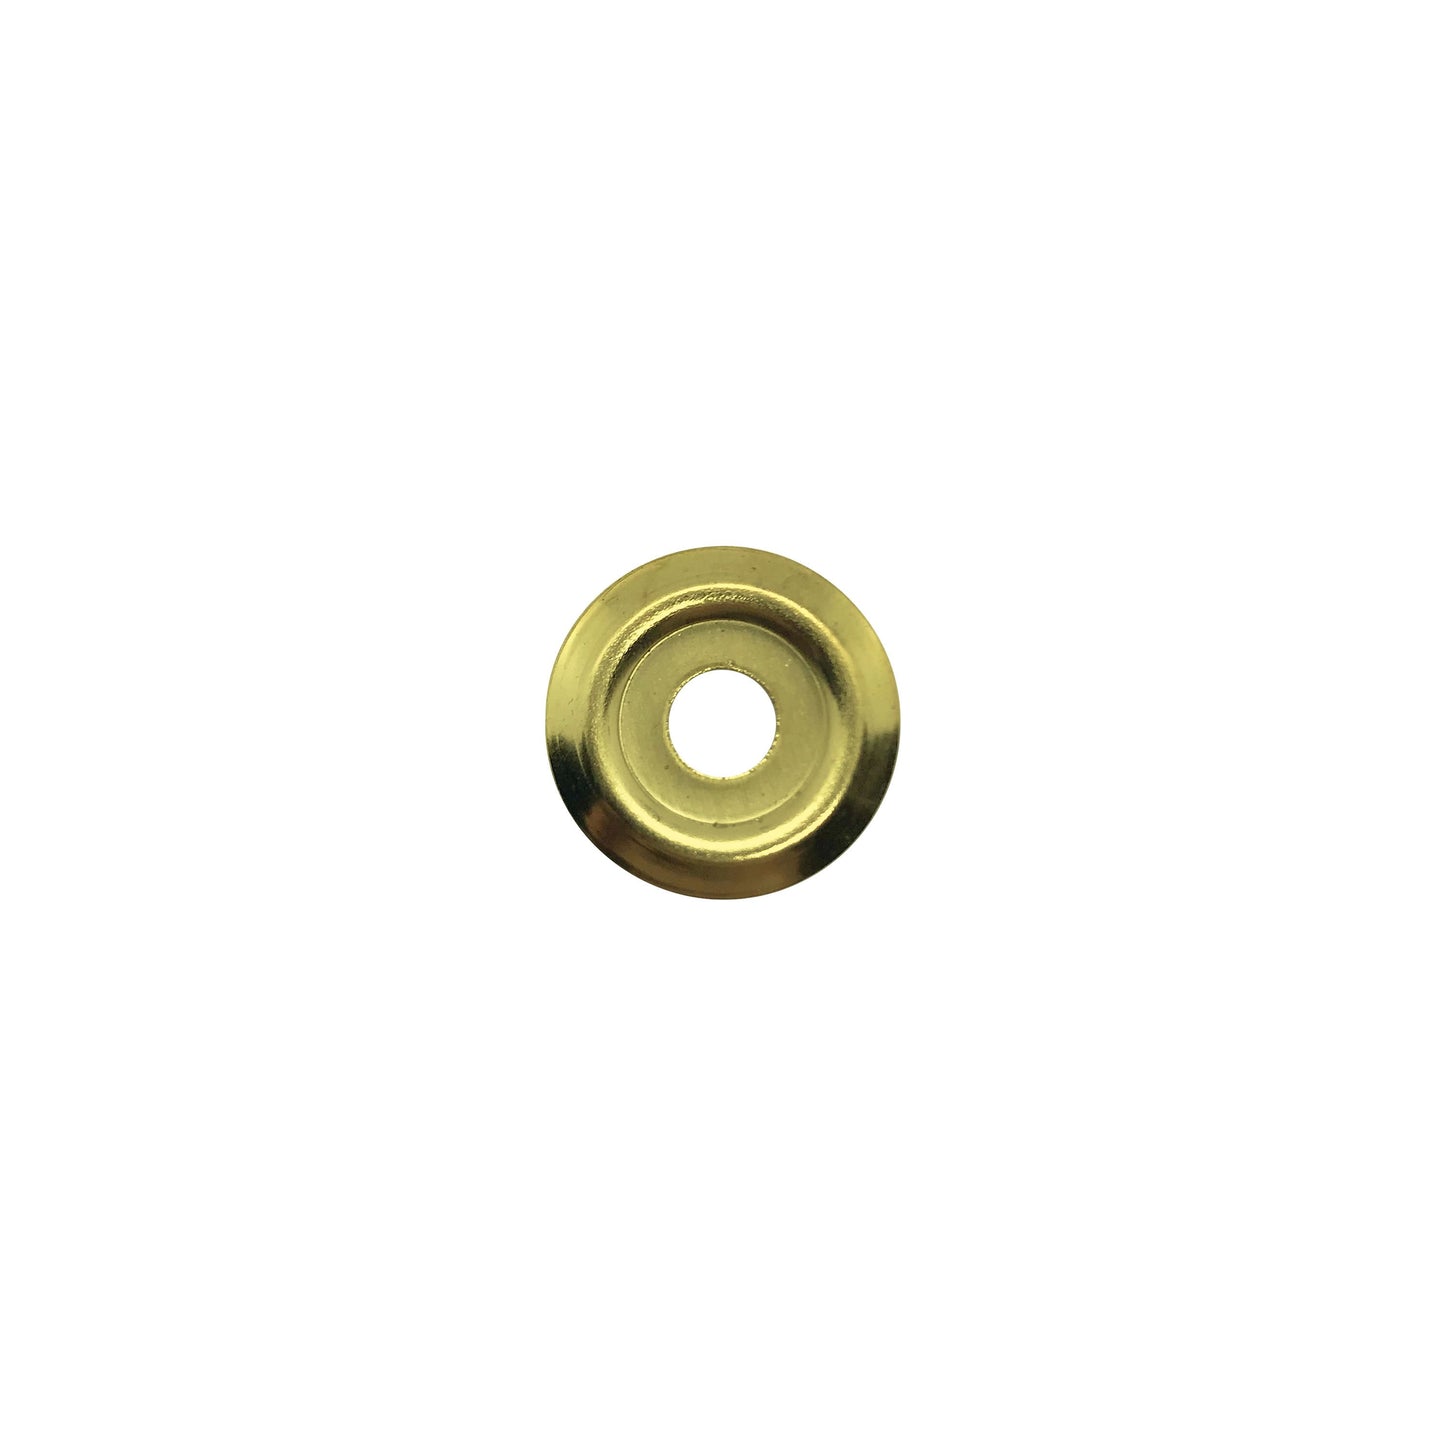 Binding Screw Washer - Brass / Gold-coloured by Gobrecht & Ulrich